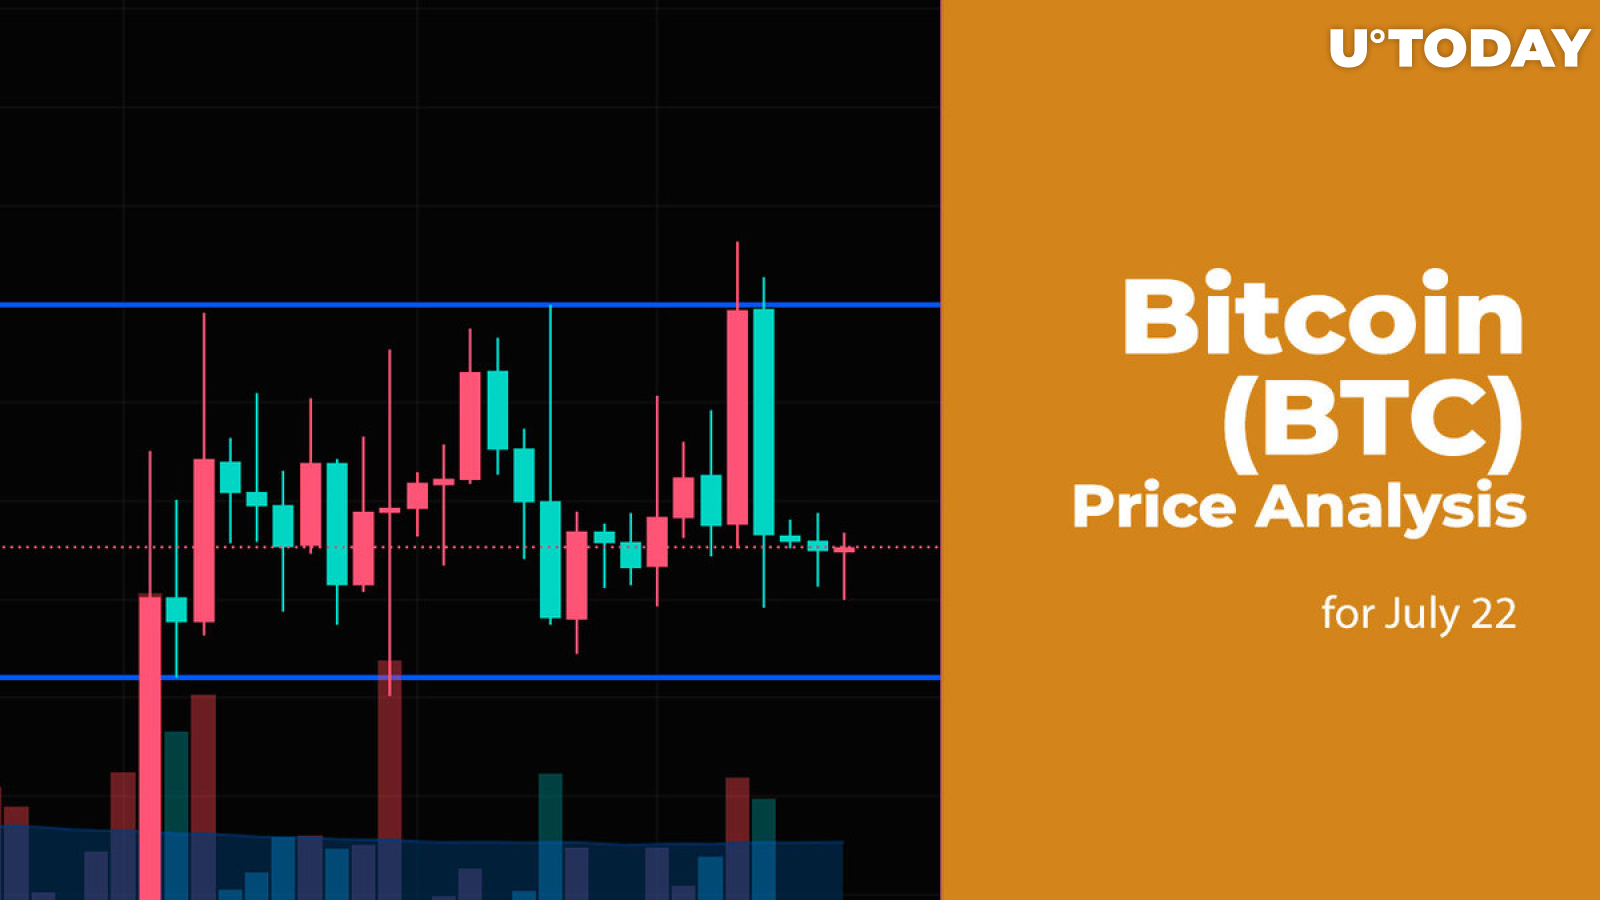 Bitcoin (BTC) Price Analysis for July 22